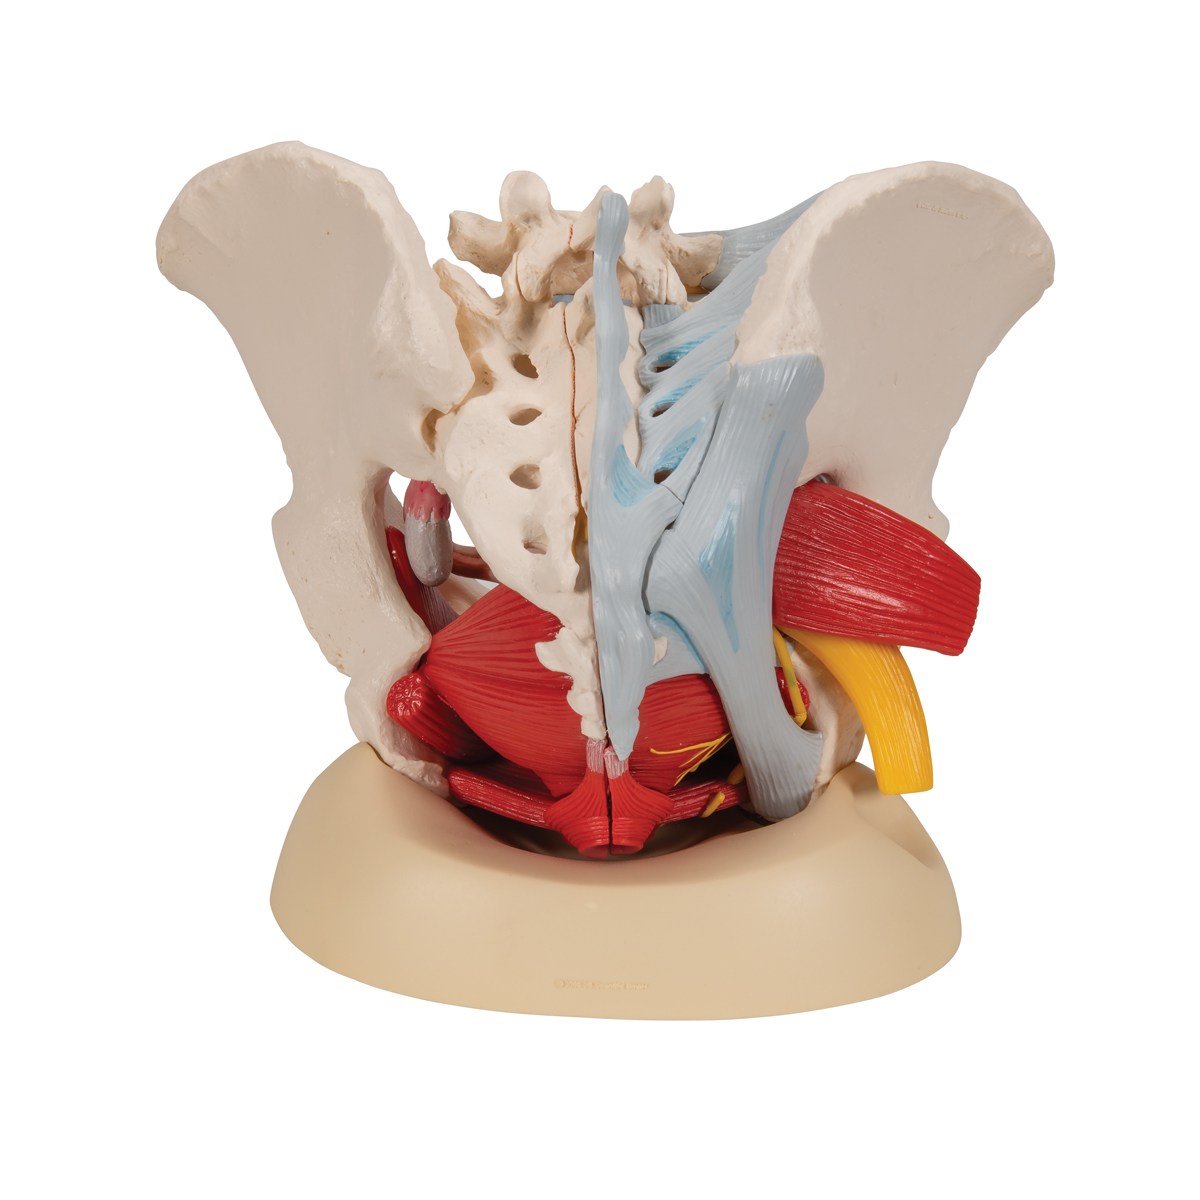 Anatomical Teaching Models, Plastic Human Pelvic Models